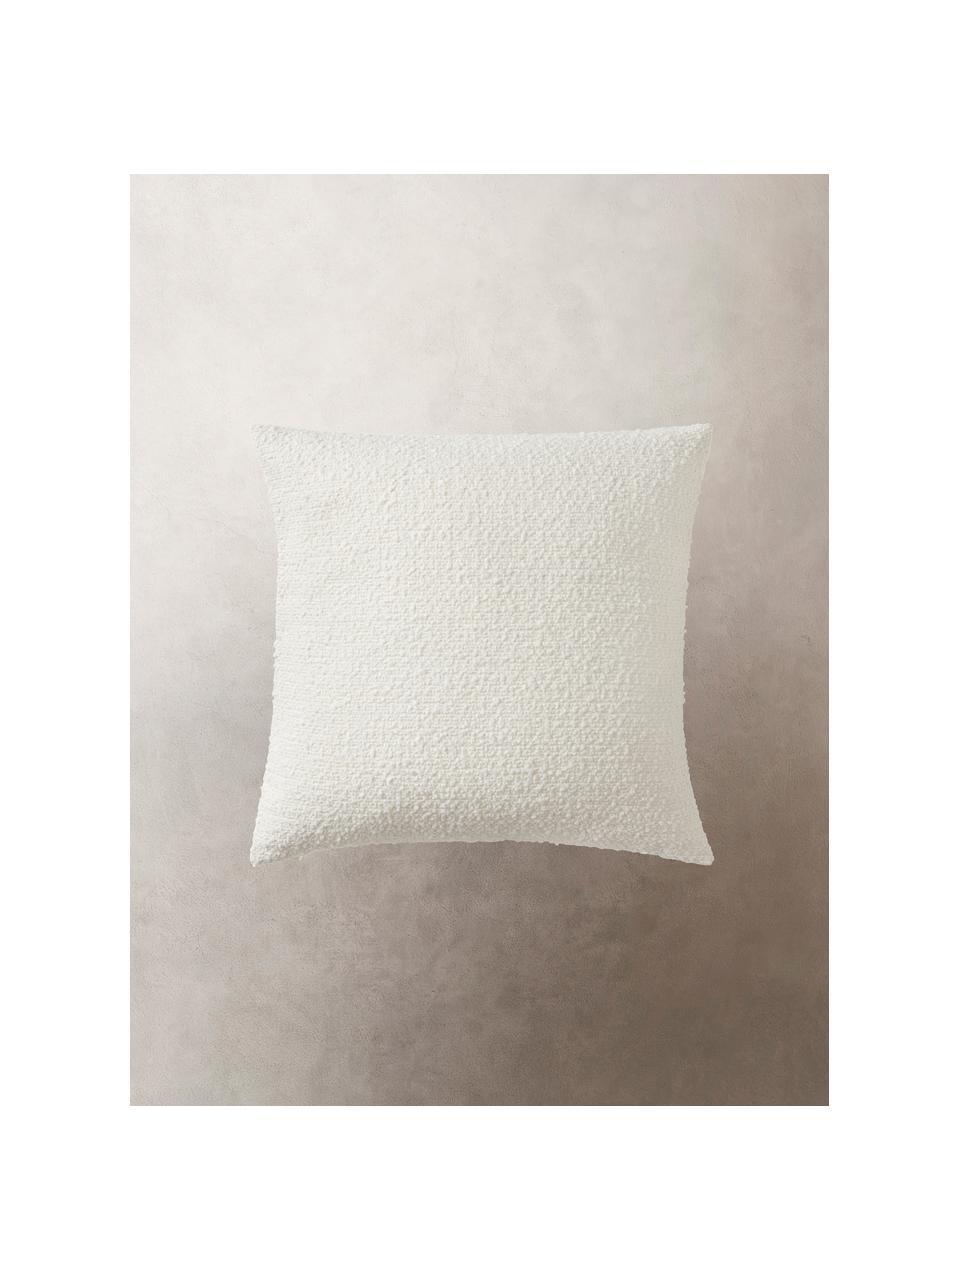 Bouclé kussenhoes Coda in wit, 97% polyester, 3% acryl, Wit, B 50 x L 50 cm